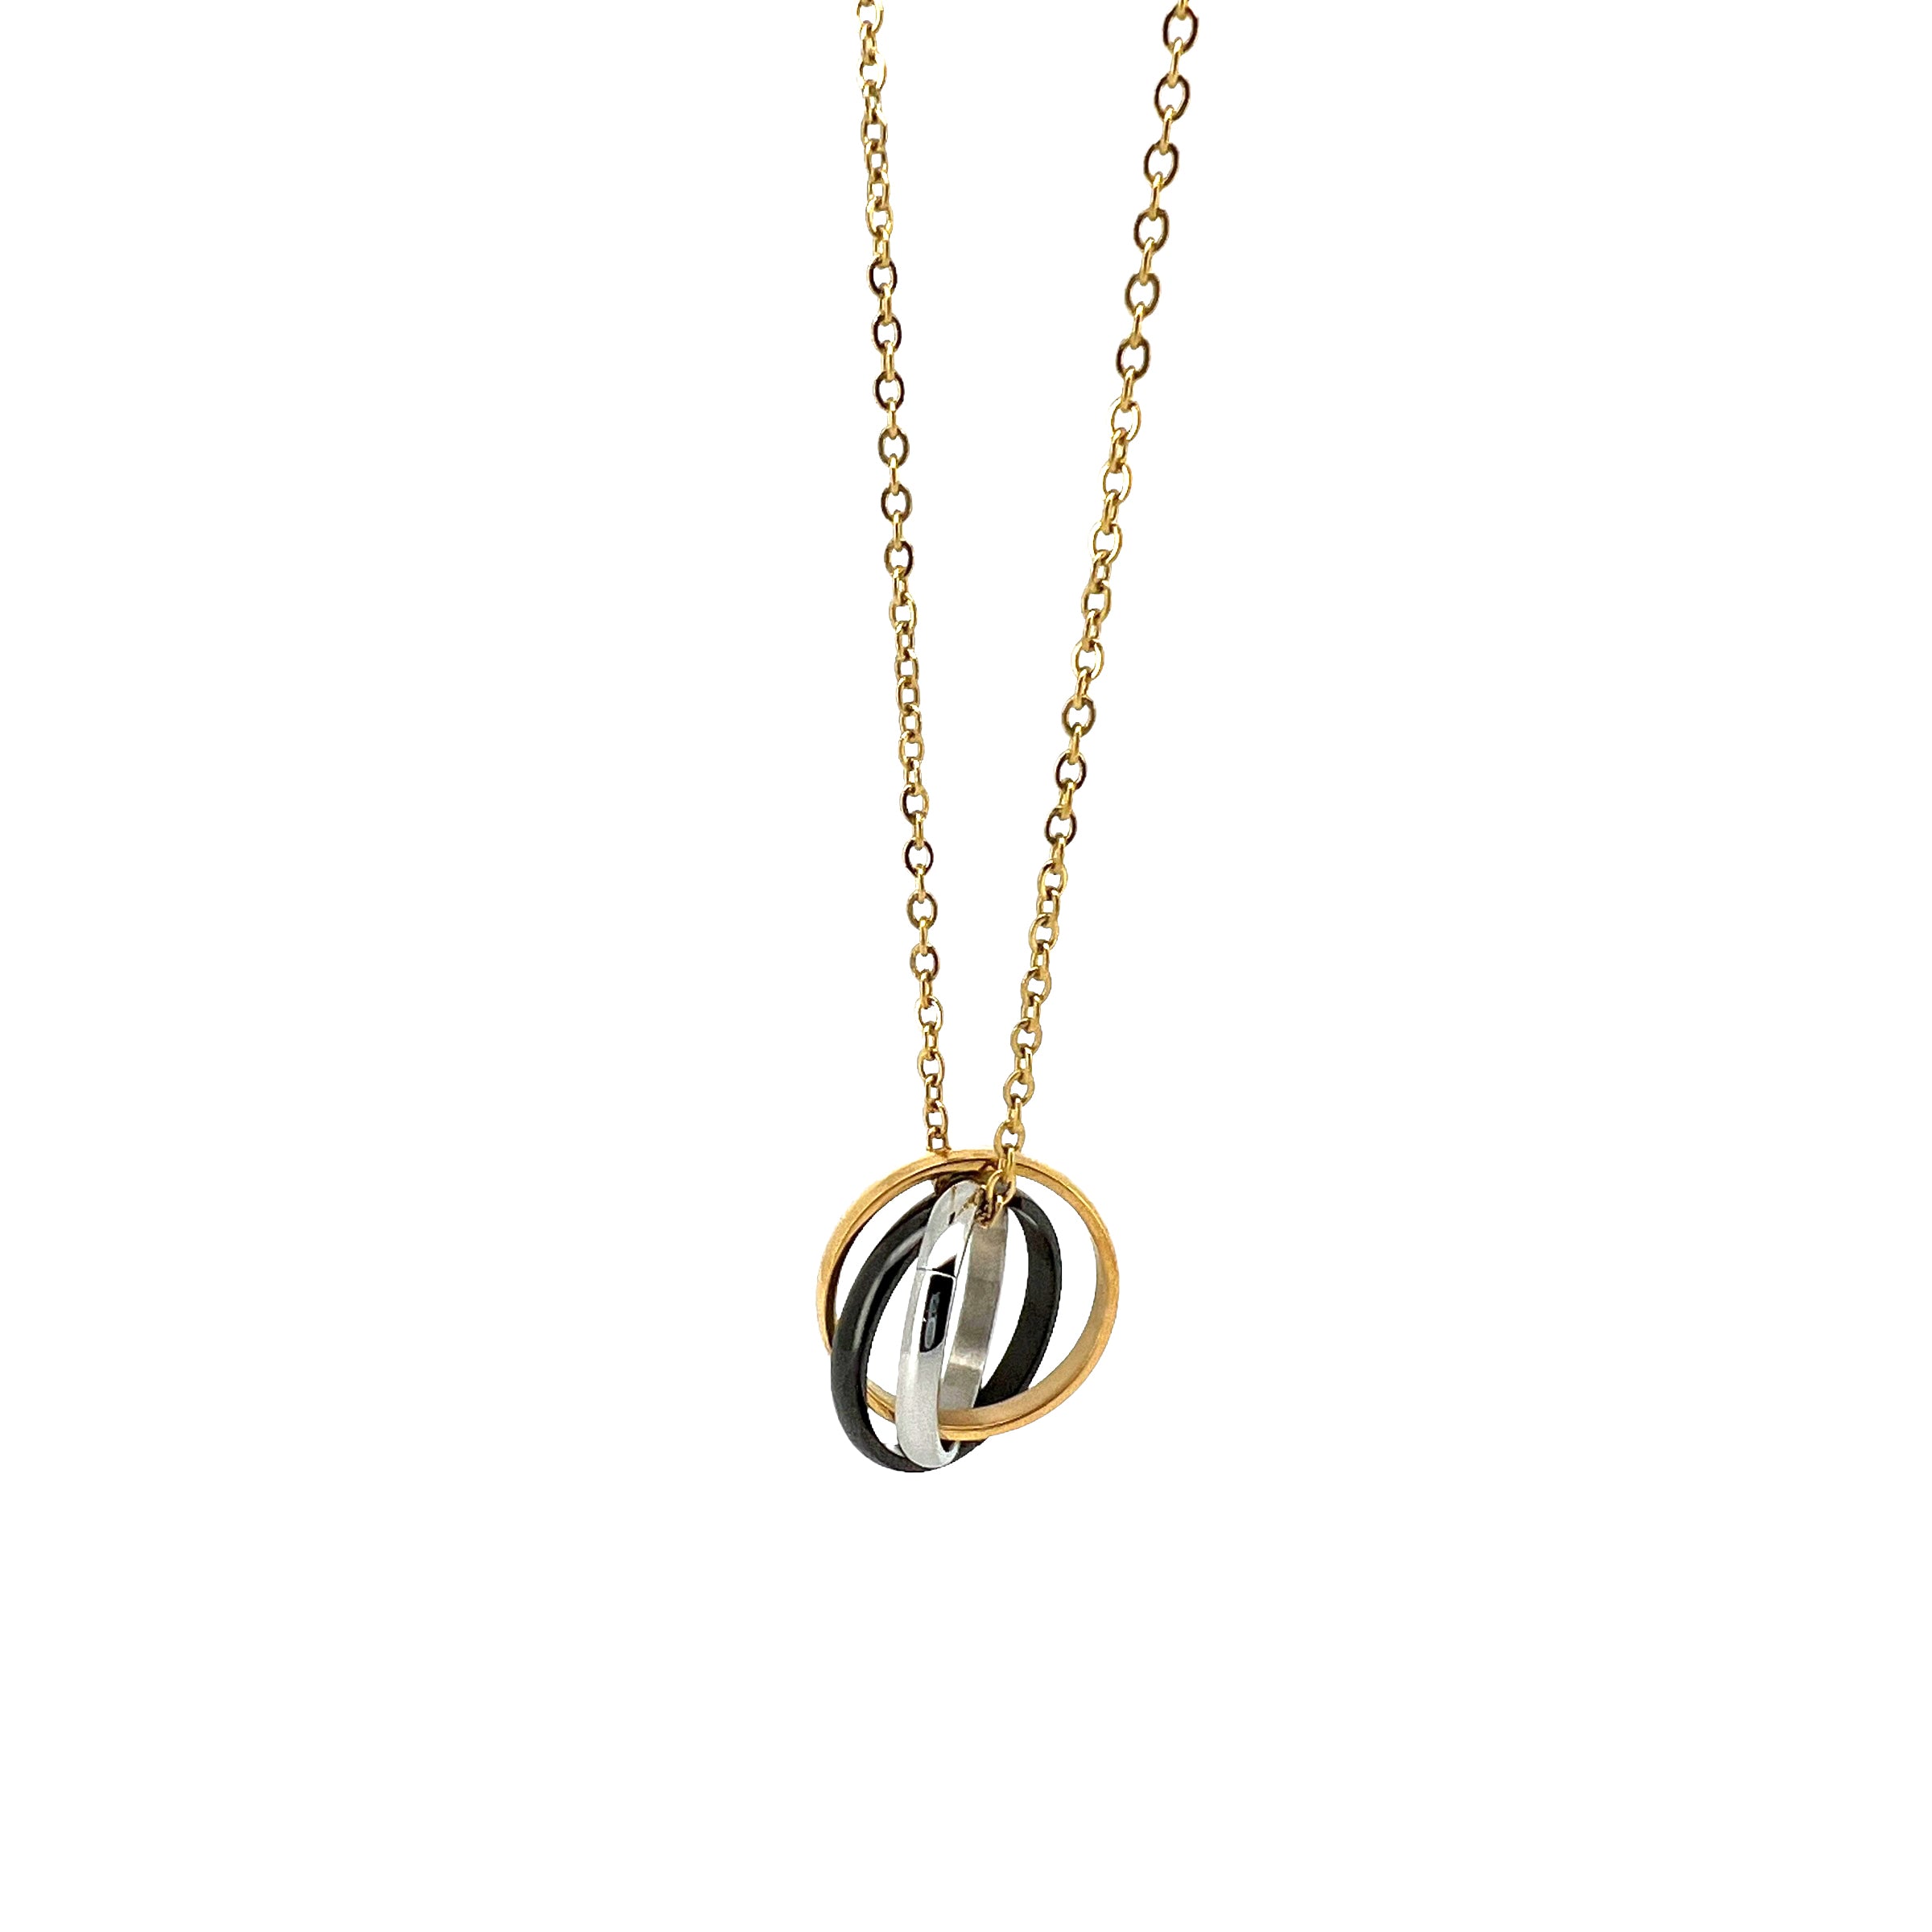 Homero Stainless Steel Necklace with Interlock Pendant